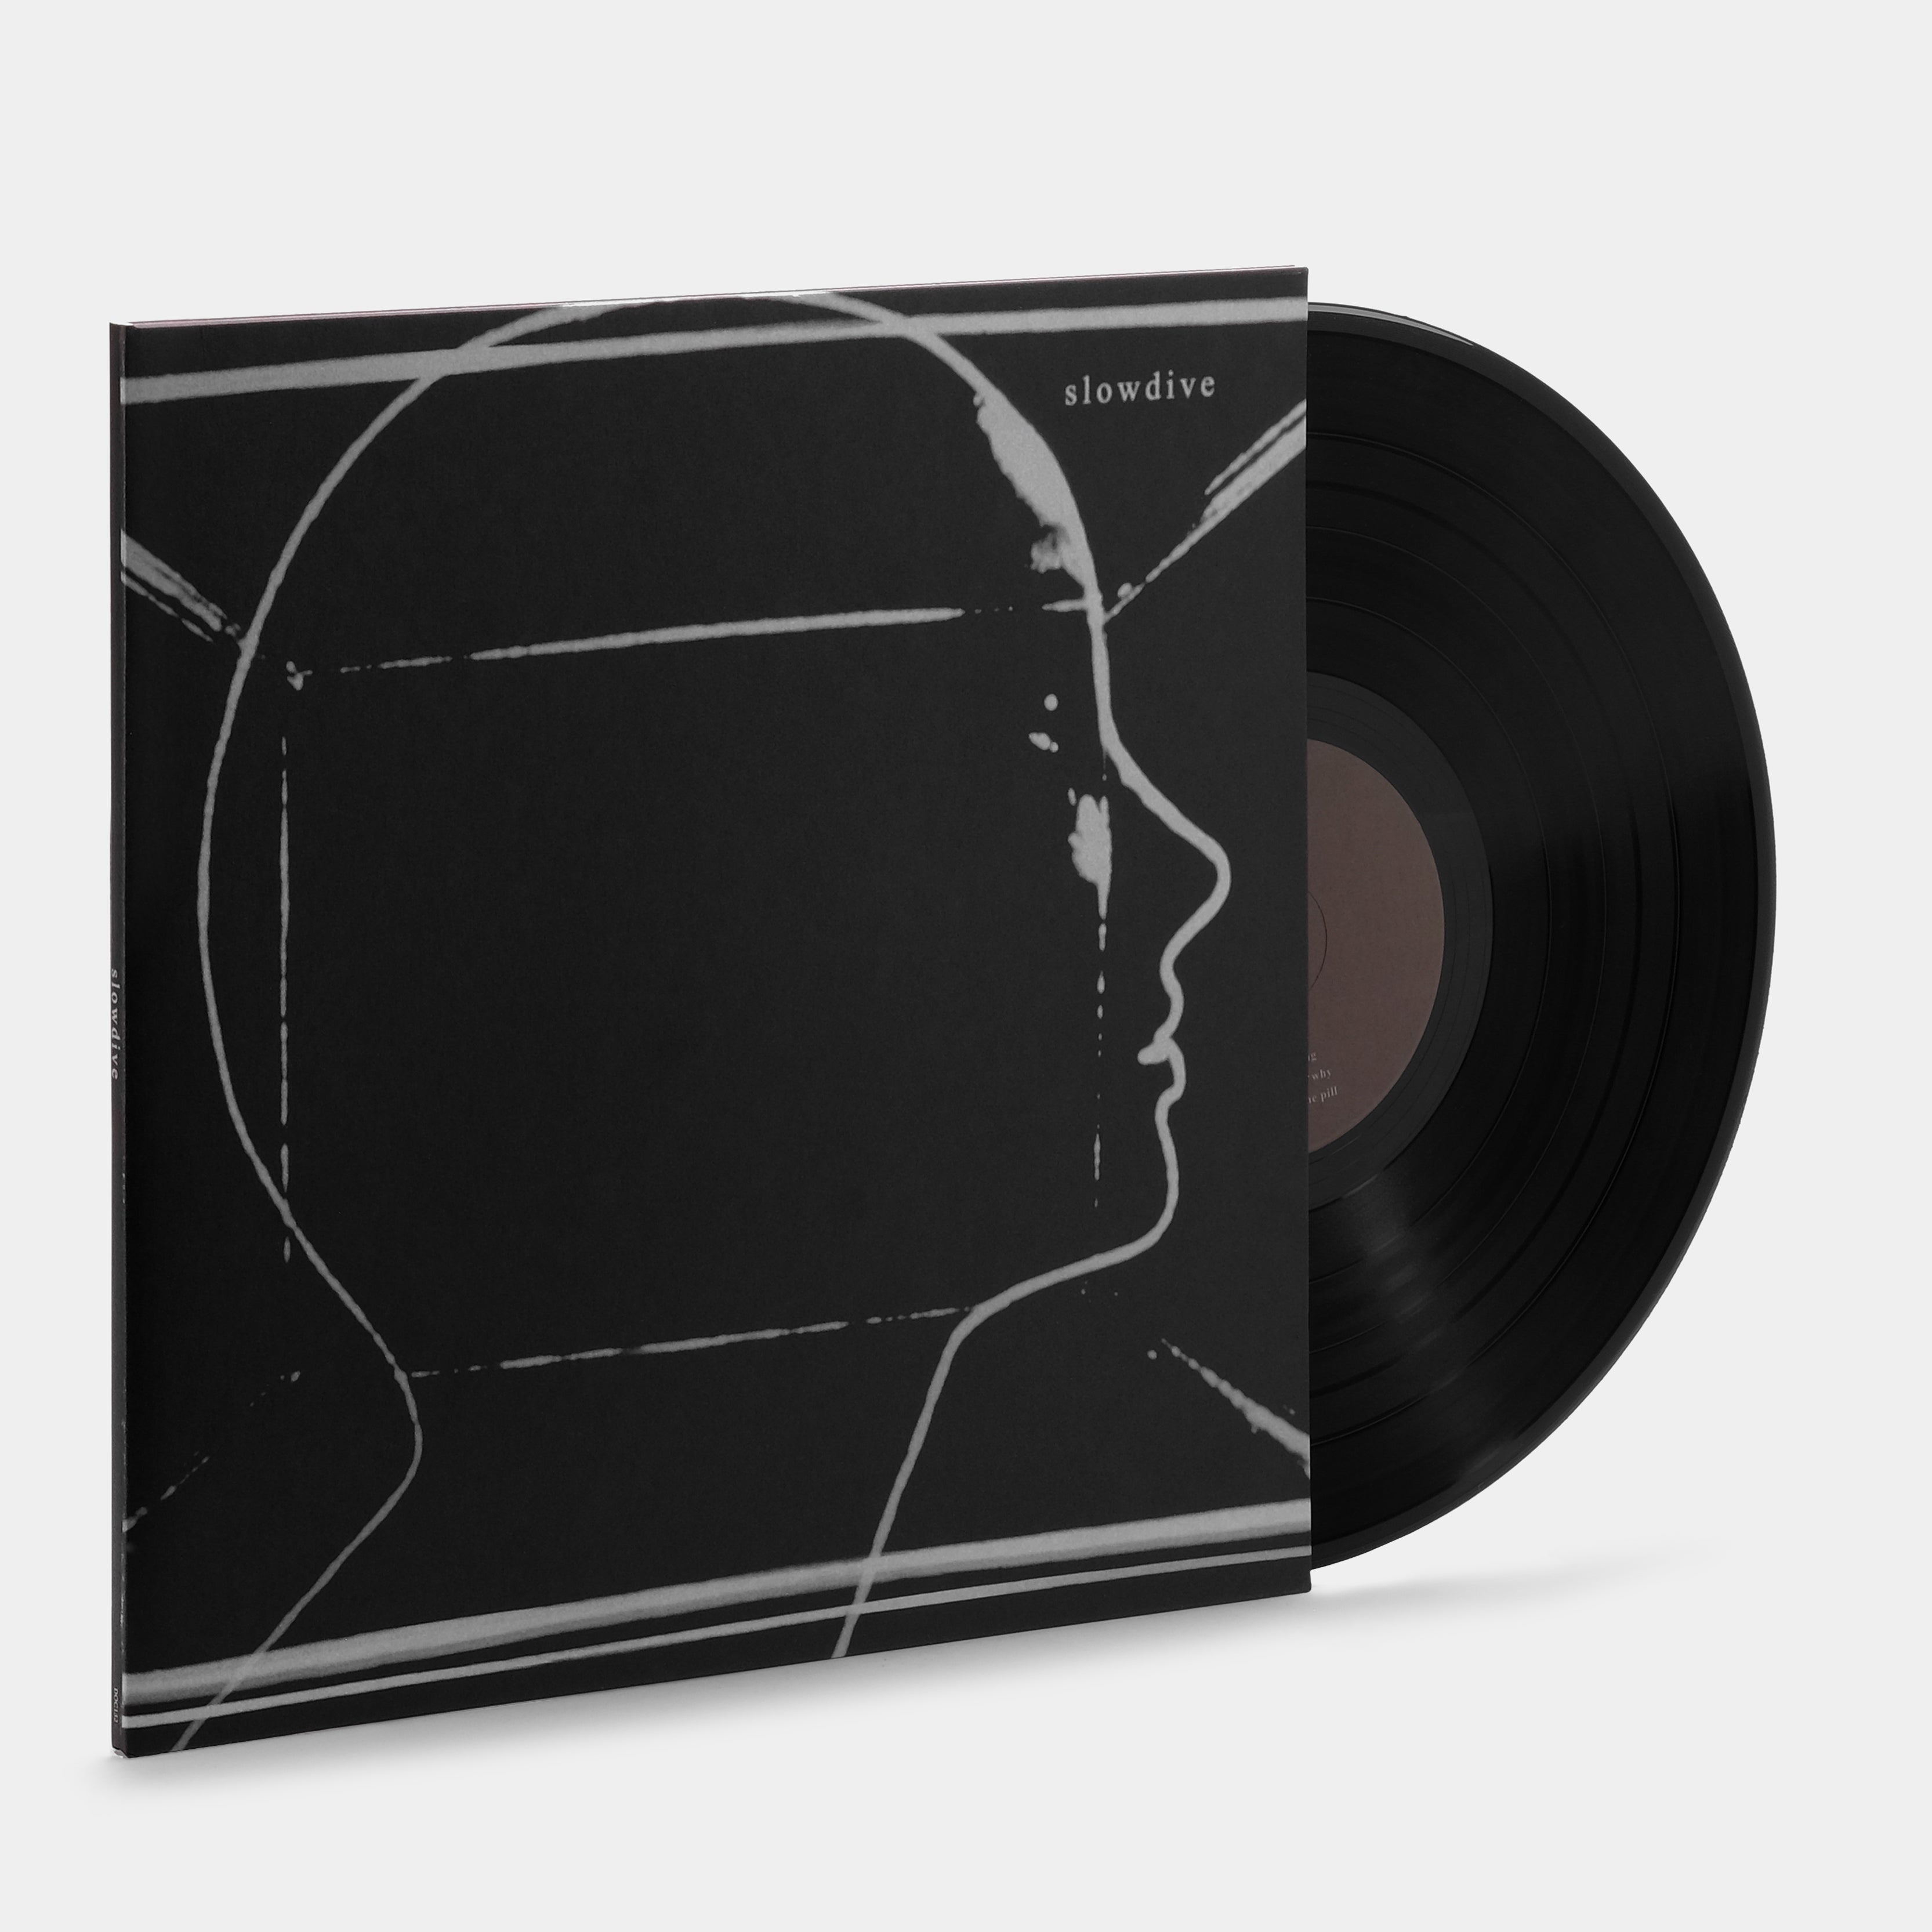 Slowdive - Slowdive LP Vinyl Record